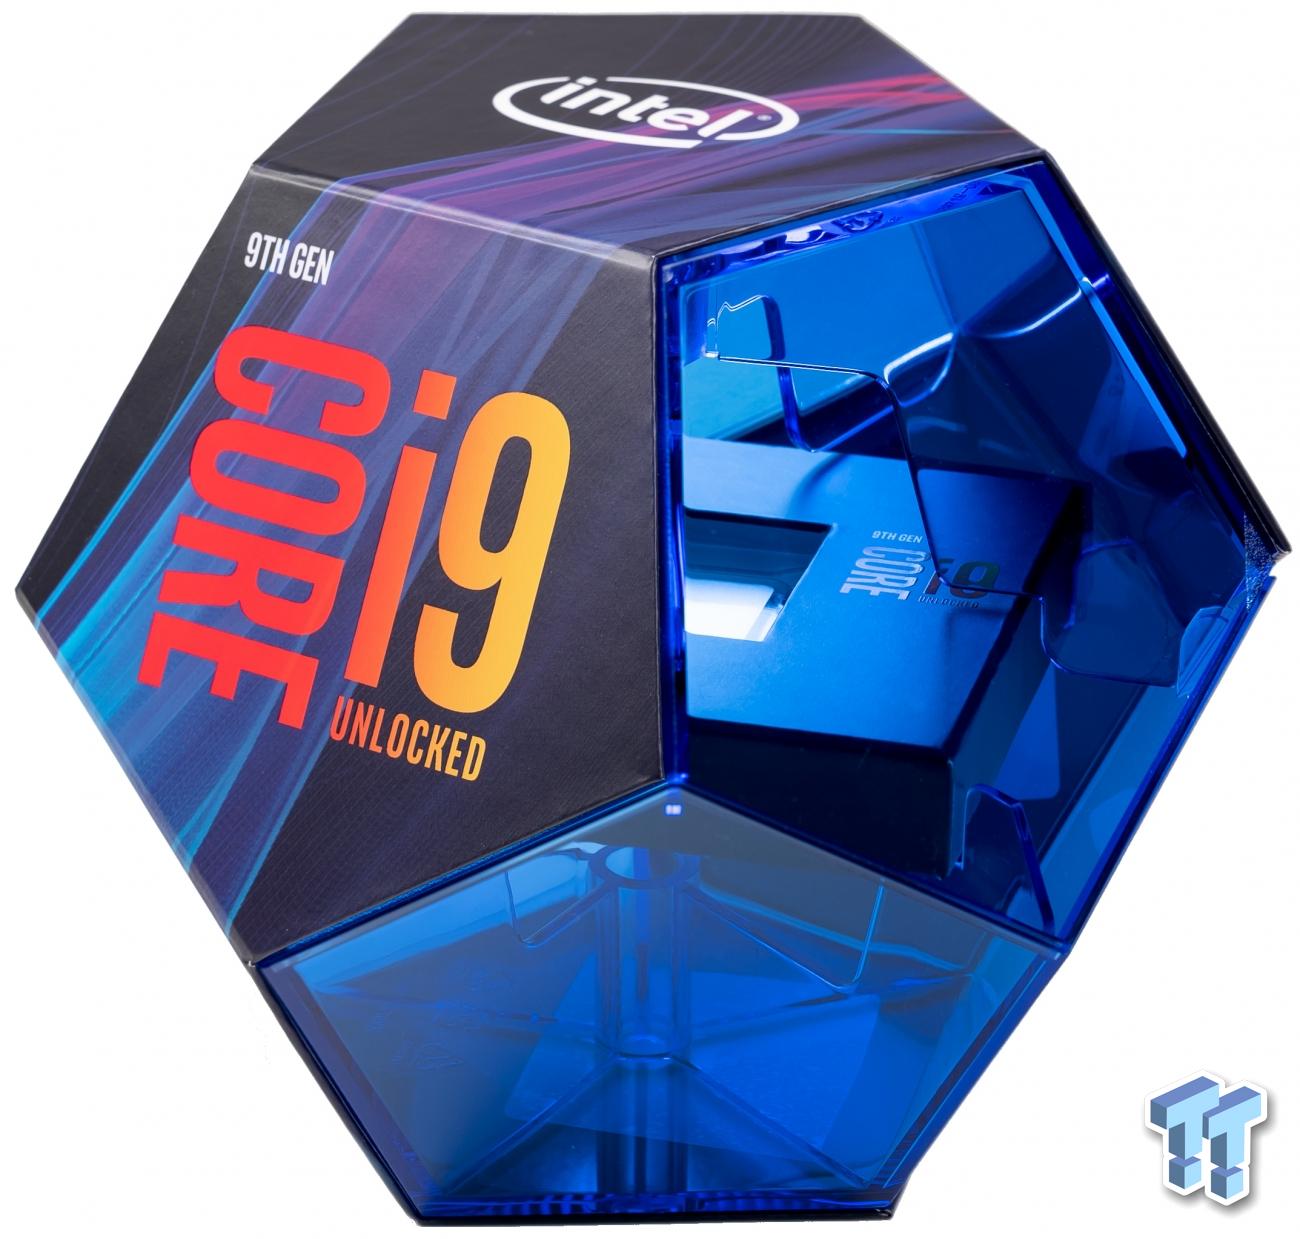 Intel Core i9 9900K/KF Overclocking Guide